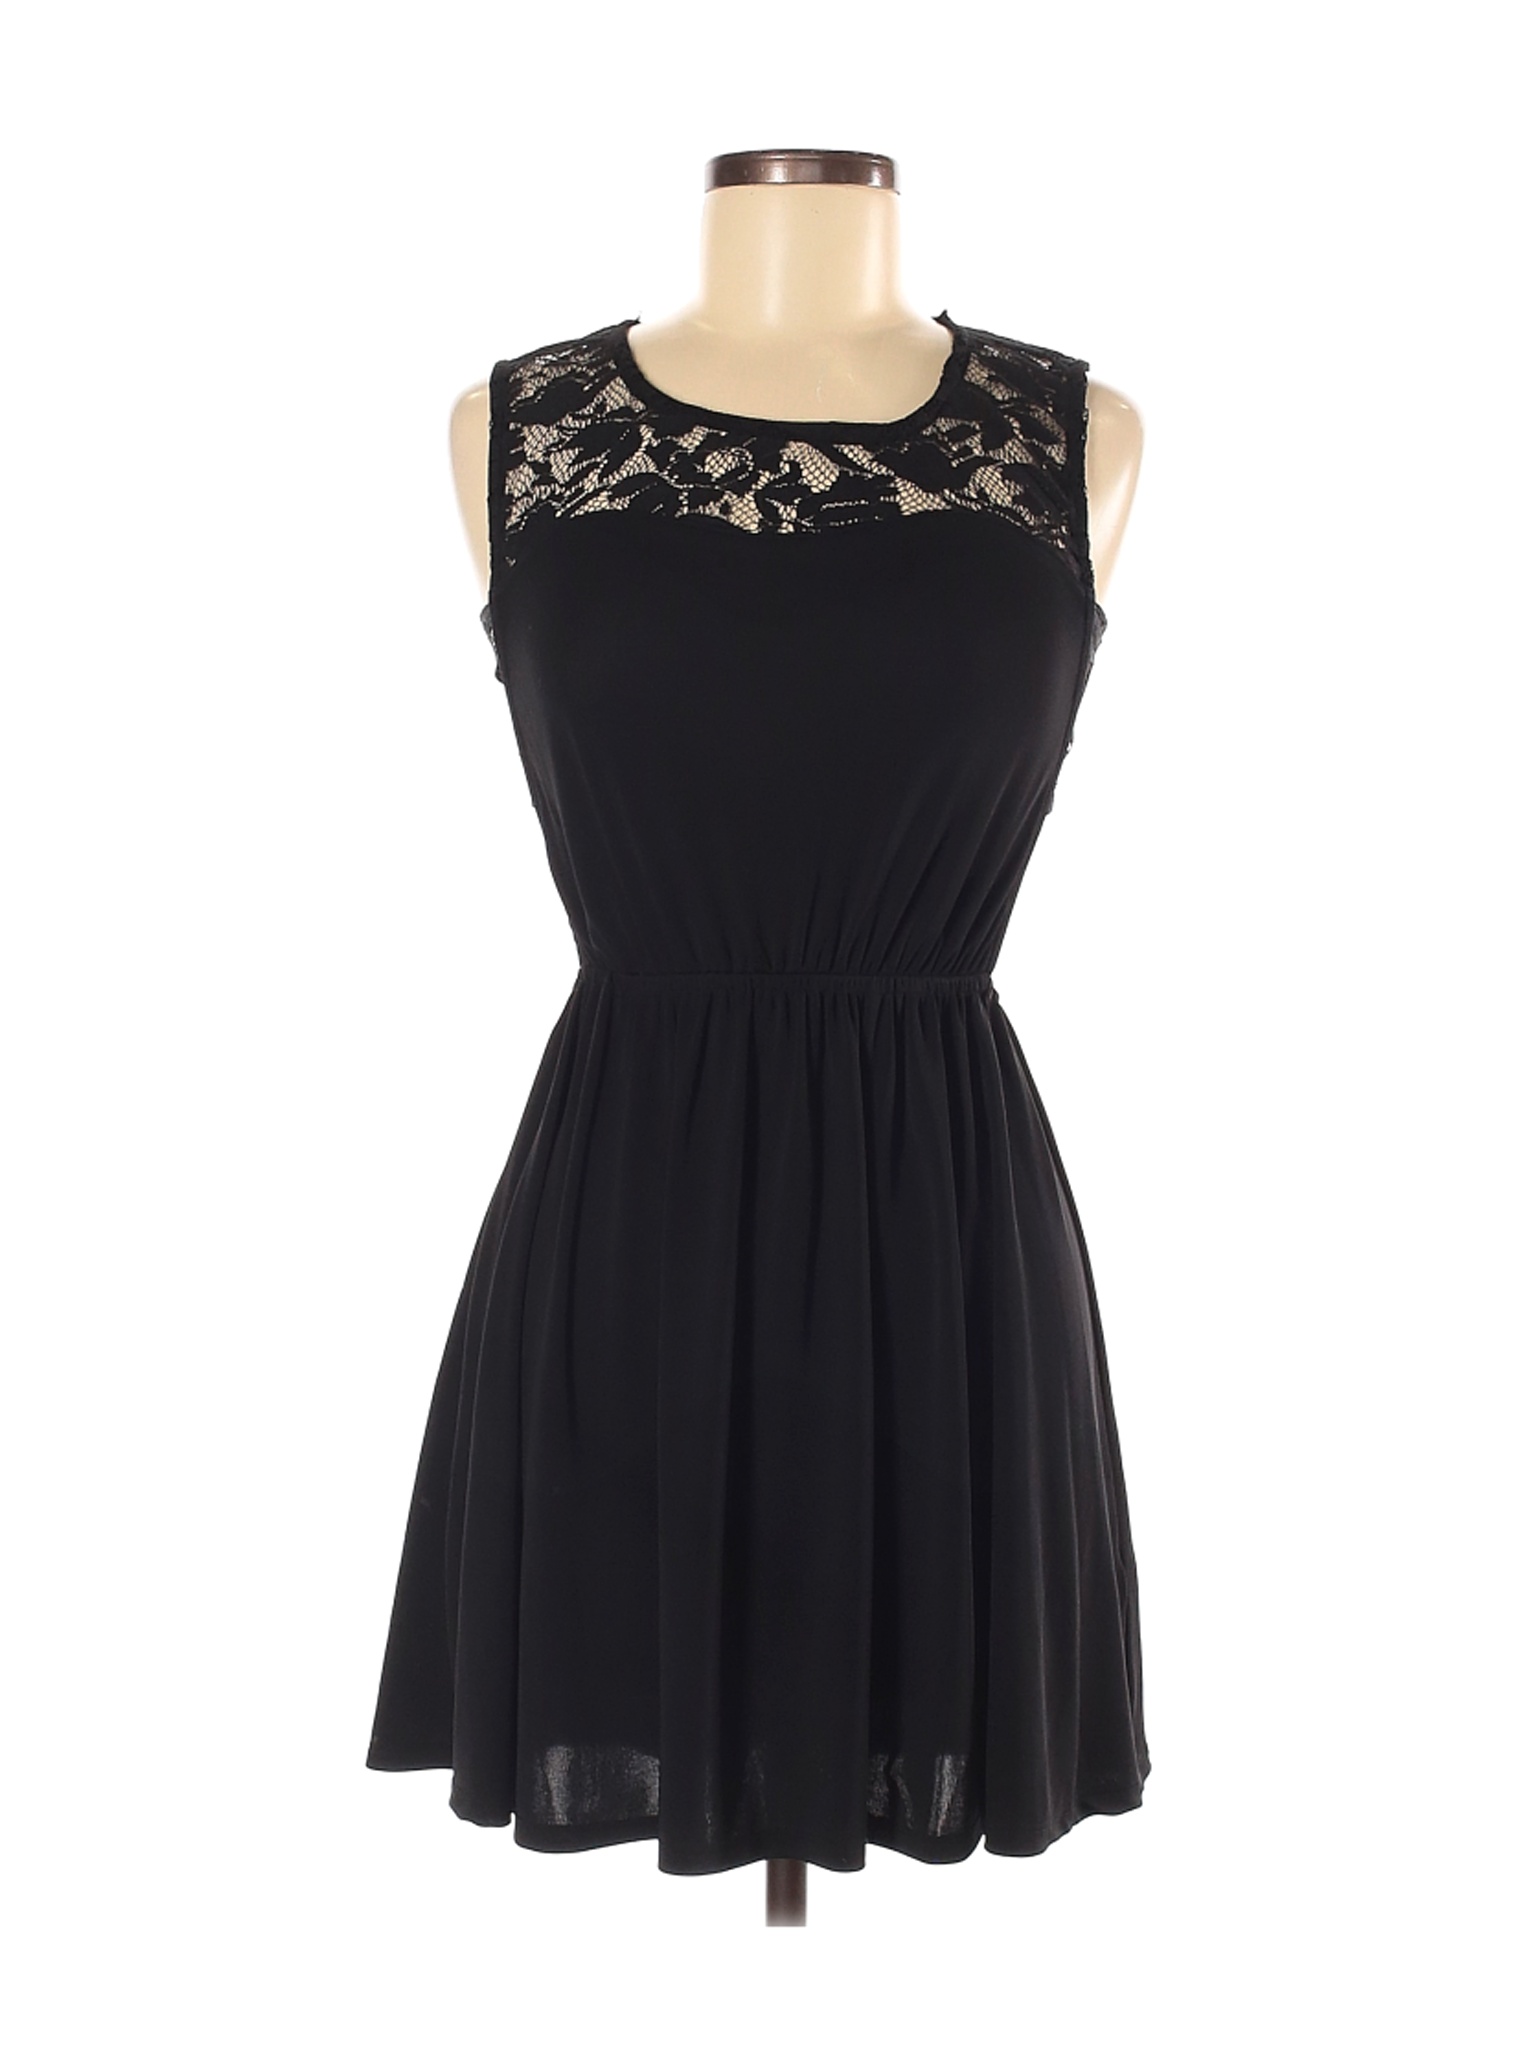 Trafaluc by Zara Women Black Casual Dress M | eBay